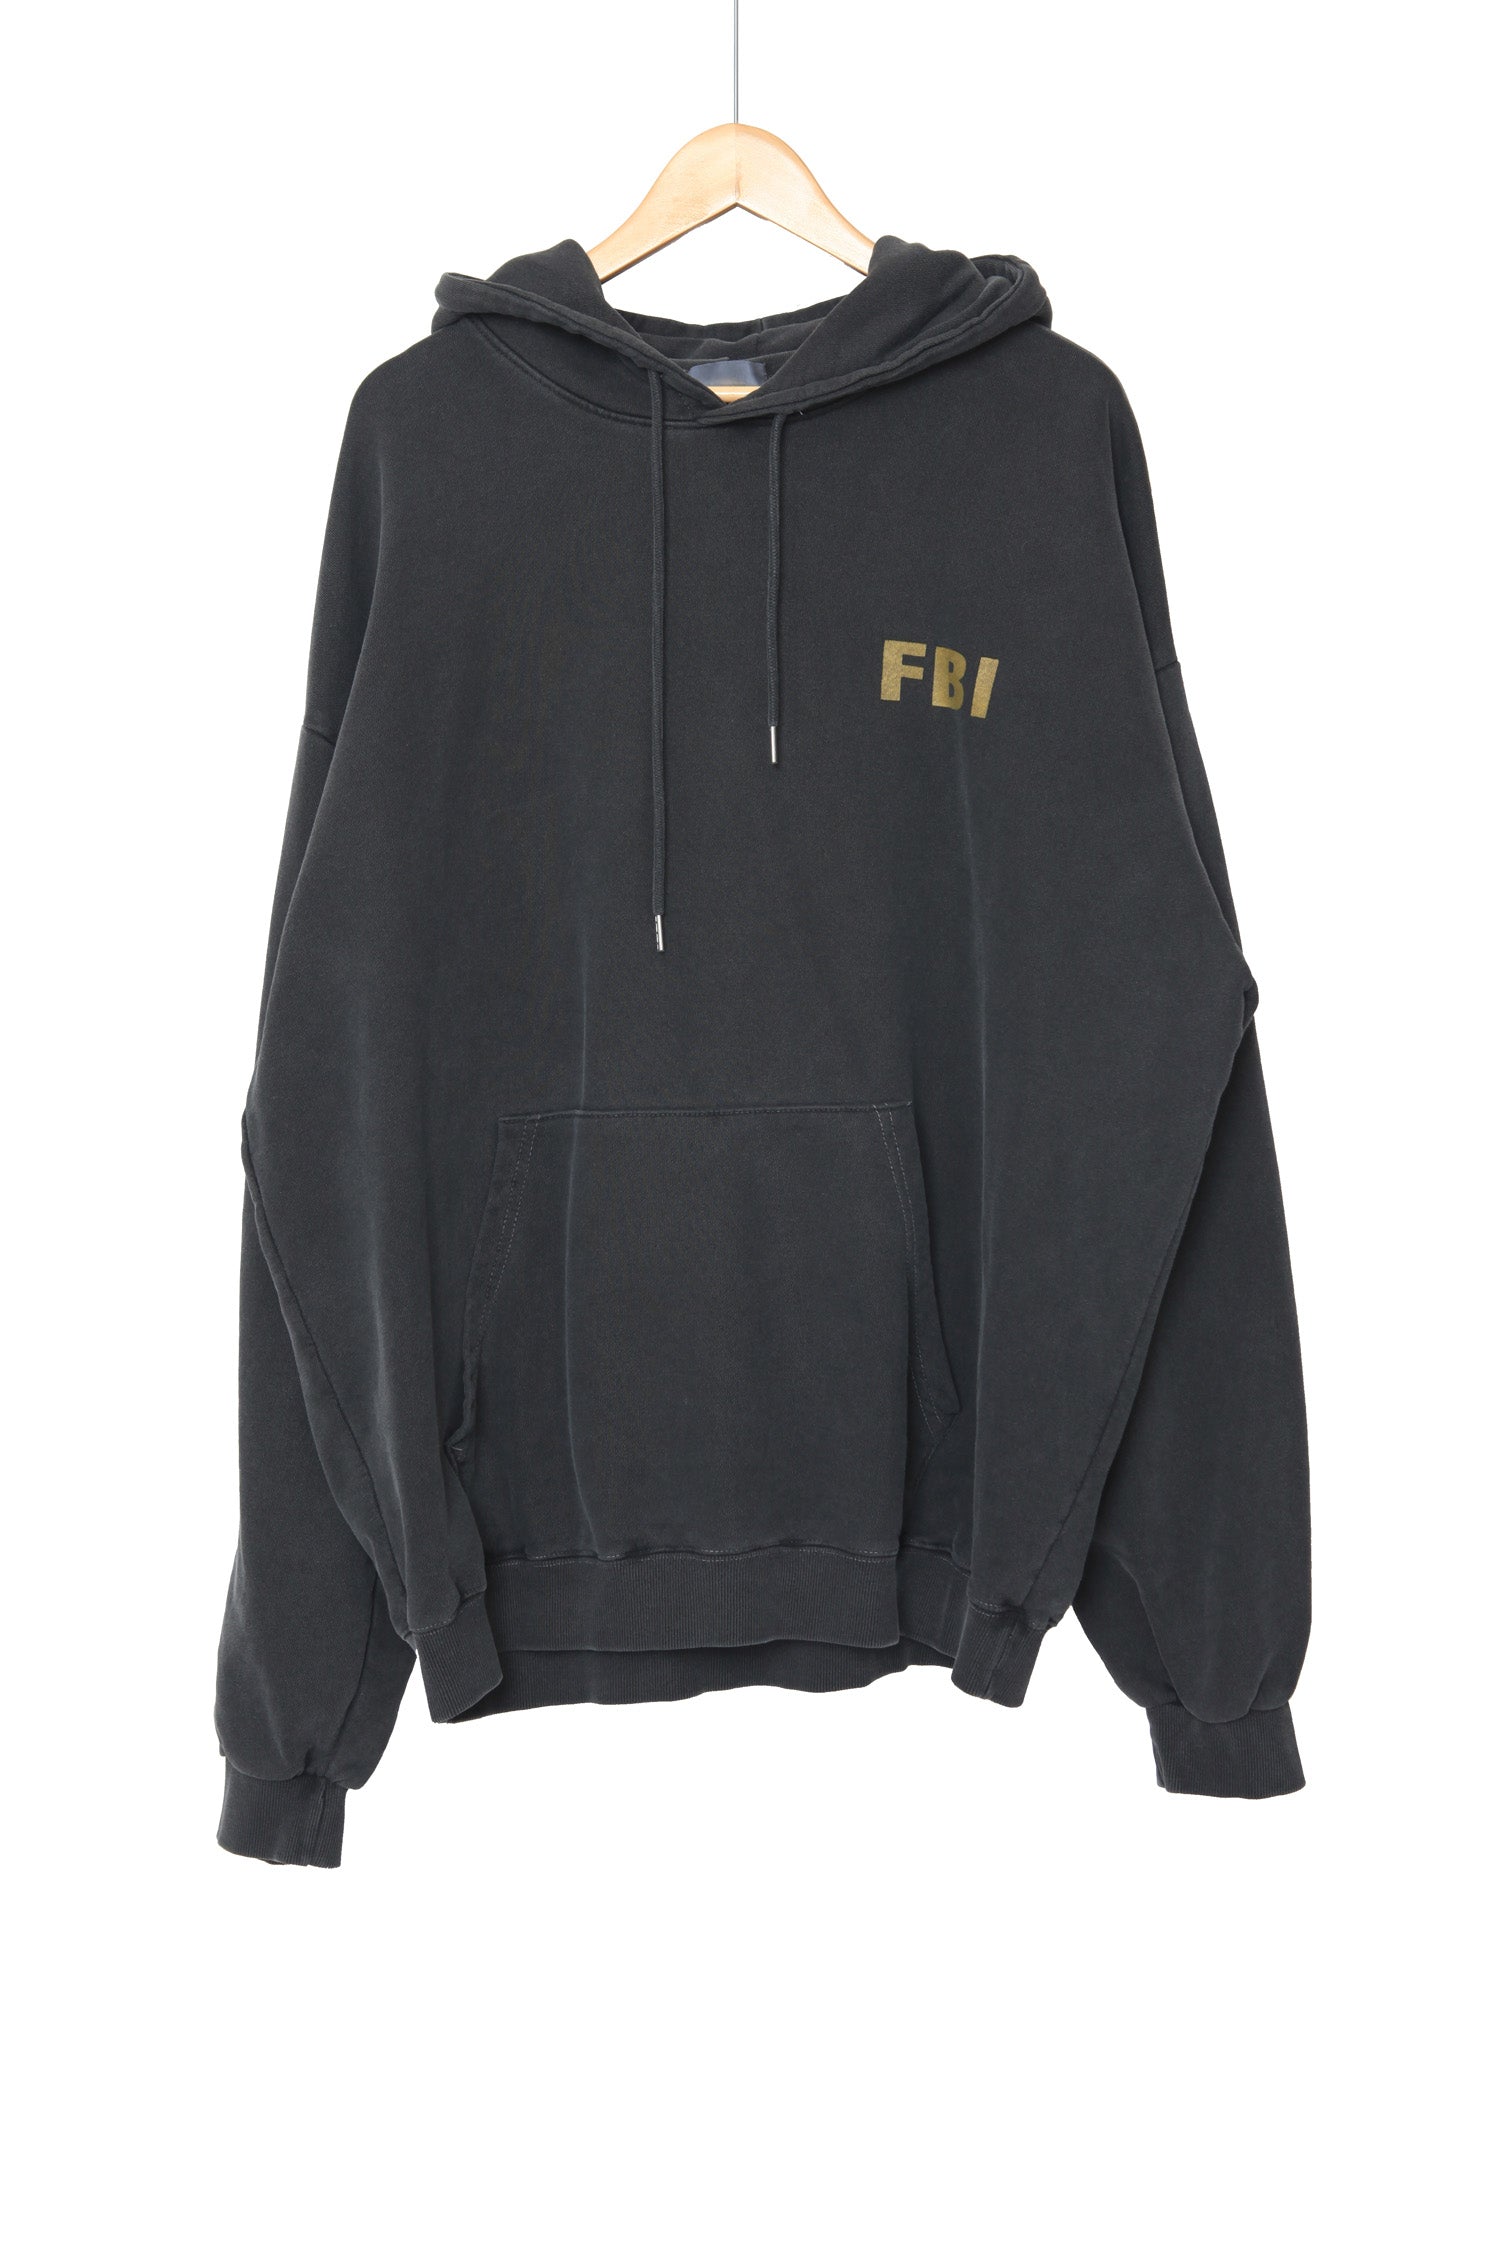 FBI Pigment Hood